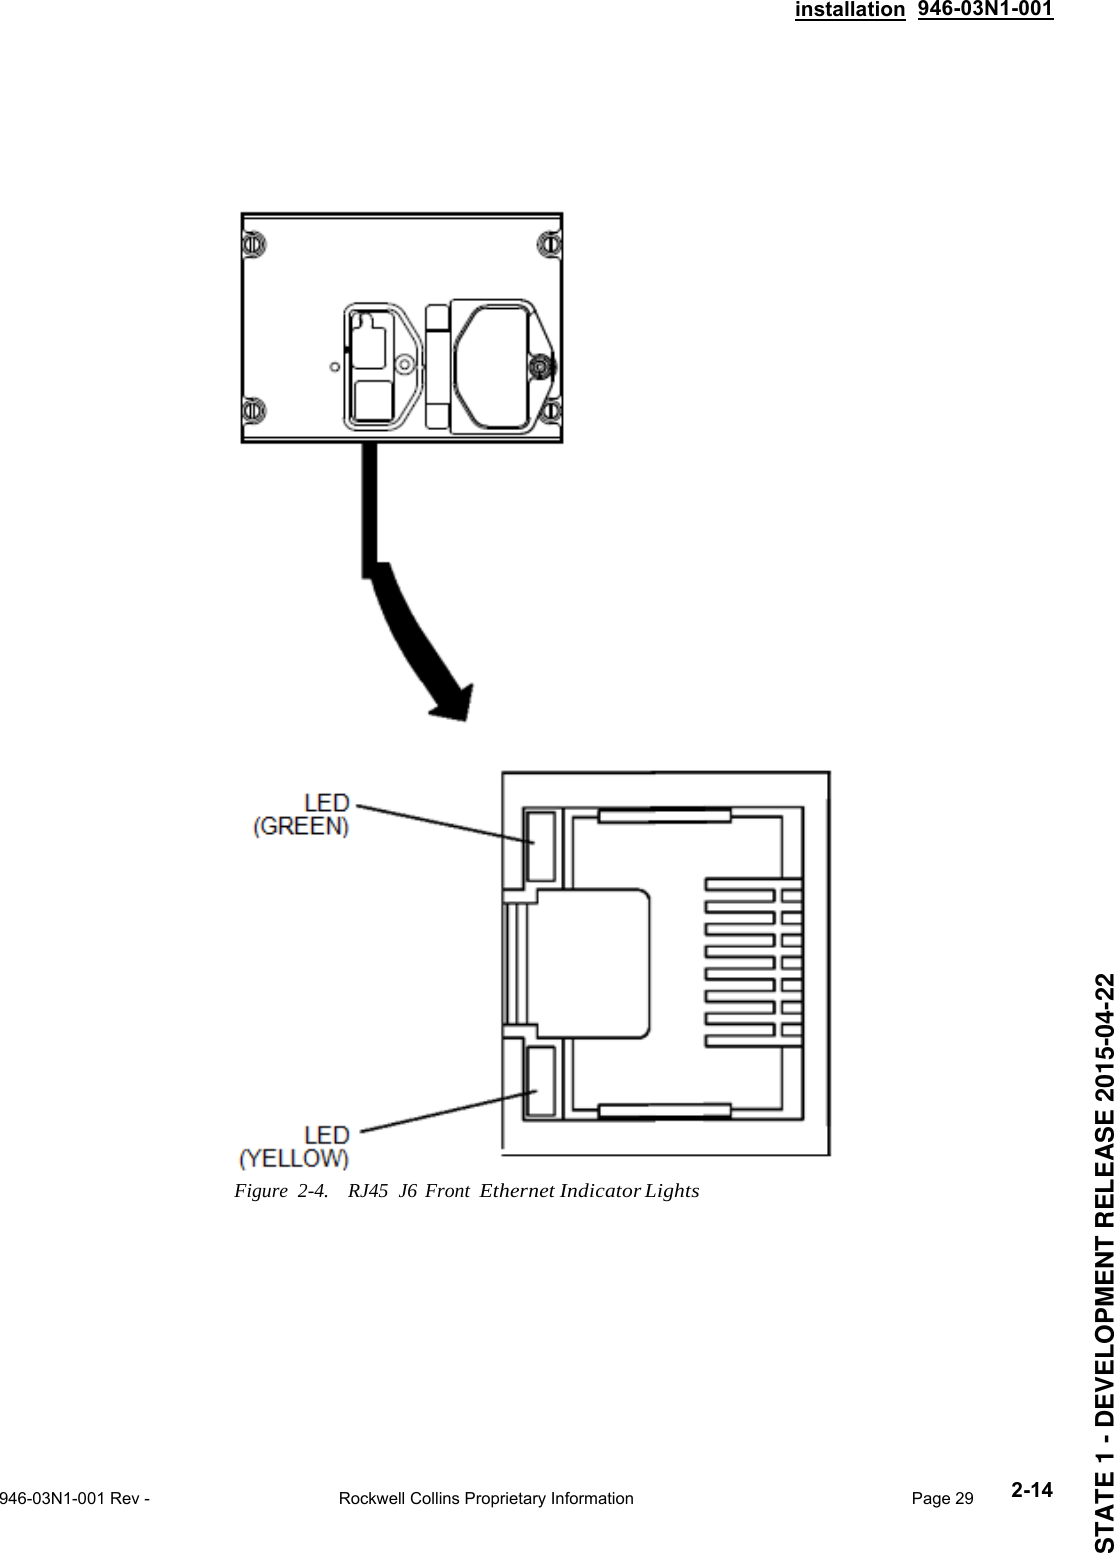 installation 946-03N1-0012-14        Figure  2-4.    RJ45  J6 Front Ethernet Indicator Lights 946-03N1-001 Rev - Rockwell Collins Proprietary InformationPage 29STATE 1 - DEVELOPMENT RELEASE 2015-04-22